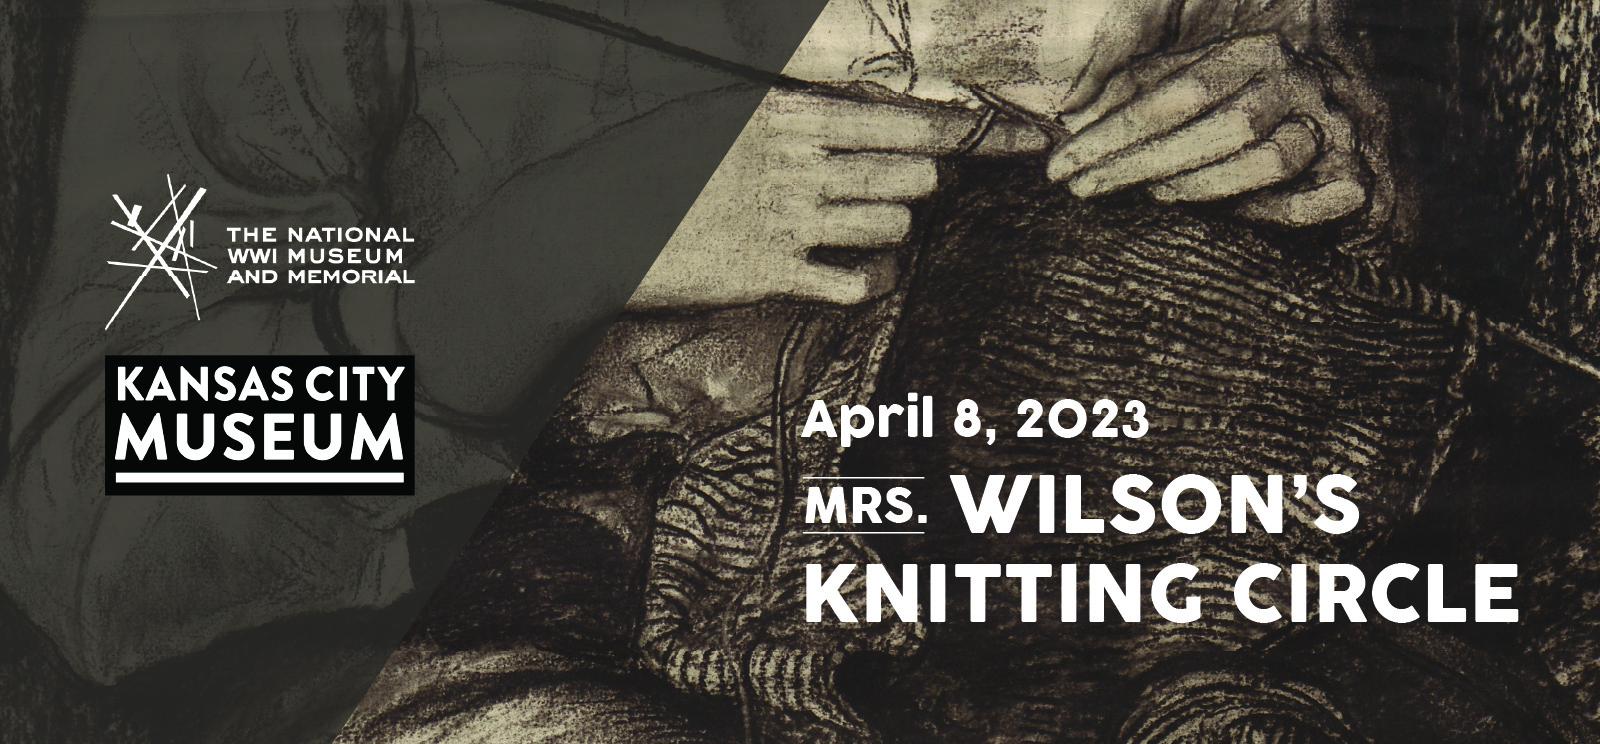 Mrs. Wilson's Knitting Circle logo with the Kansas City Museum logo